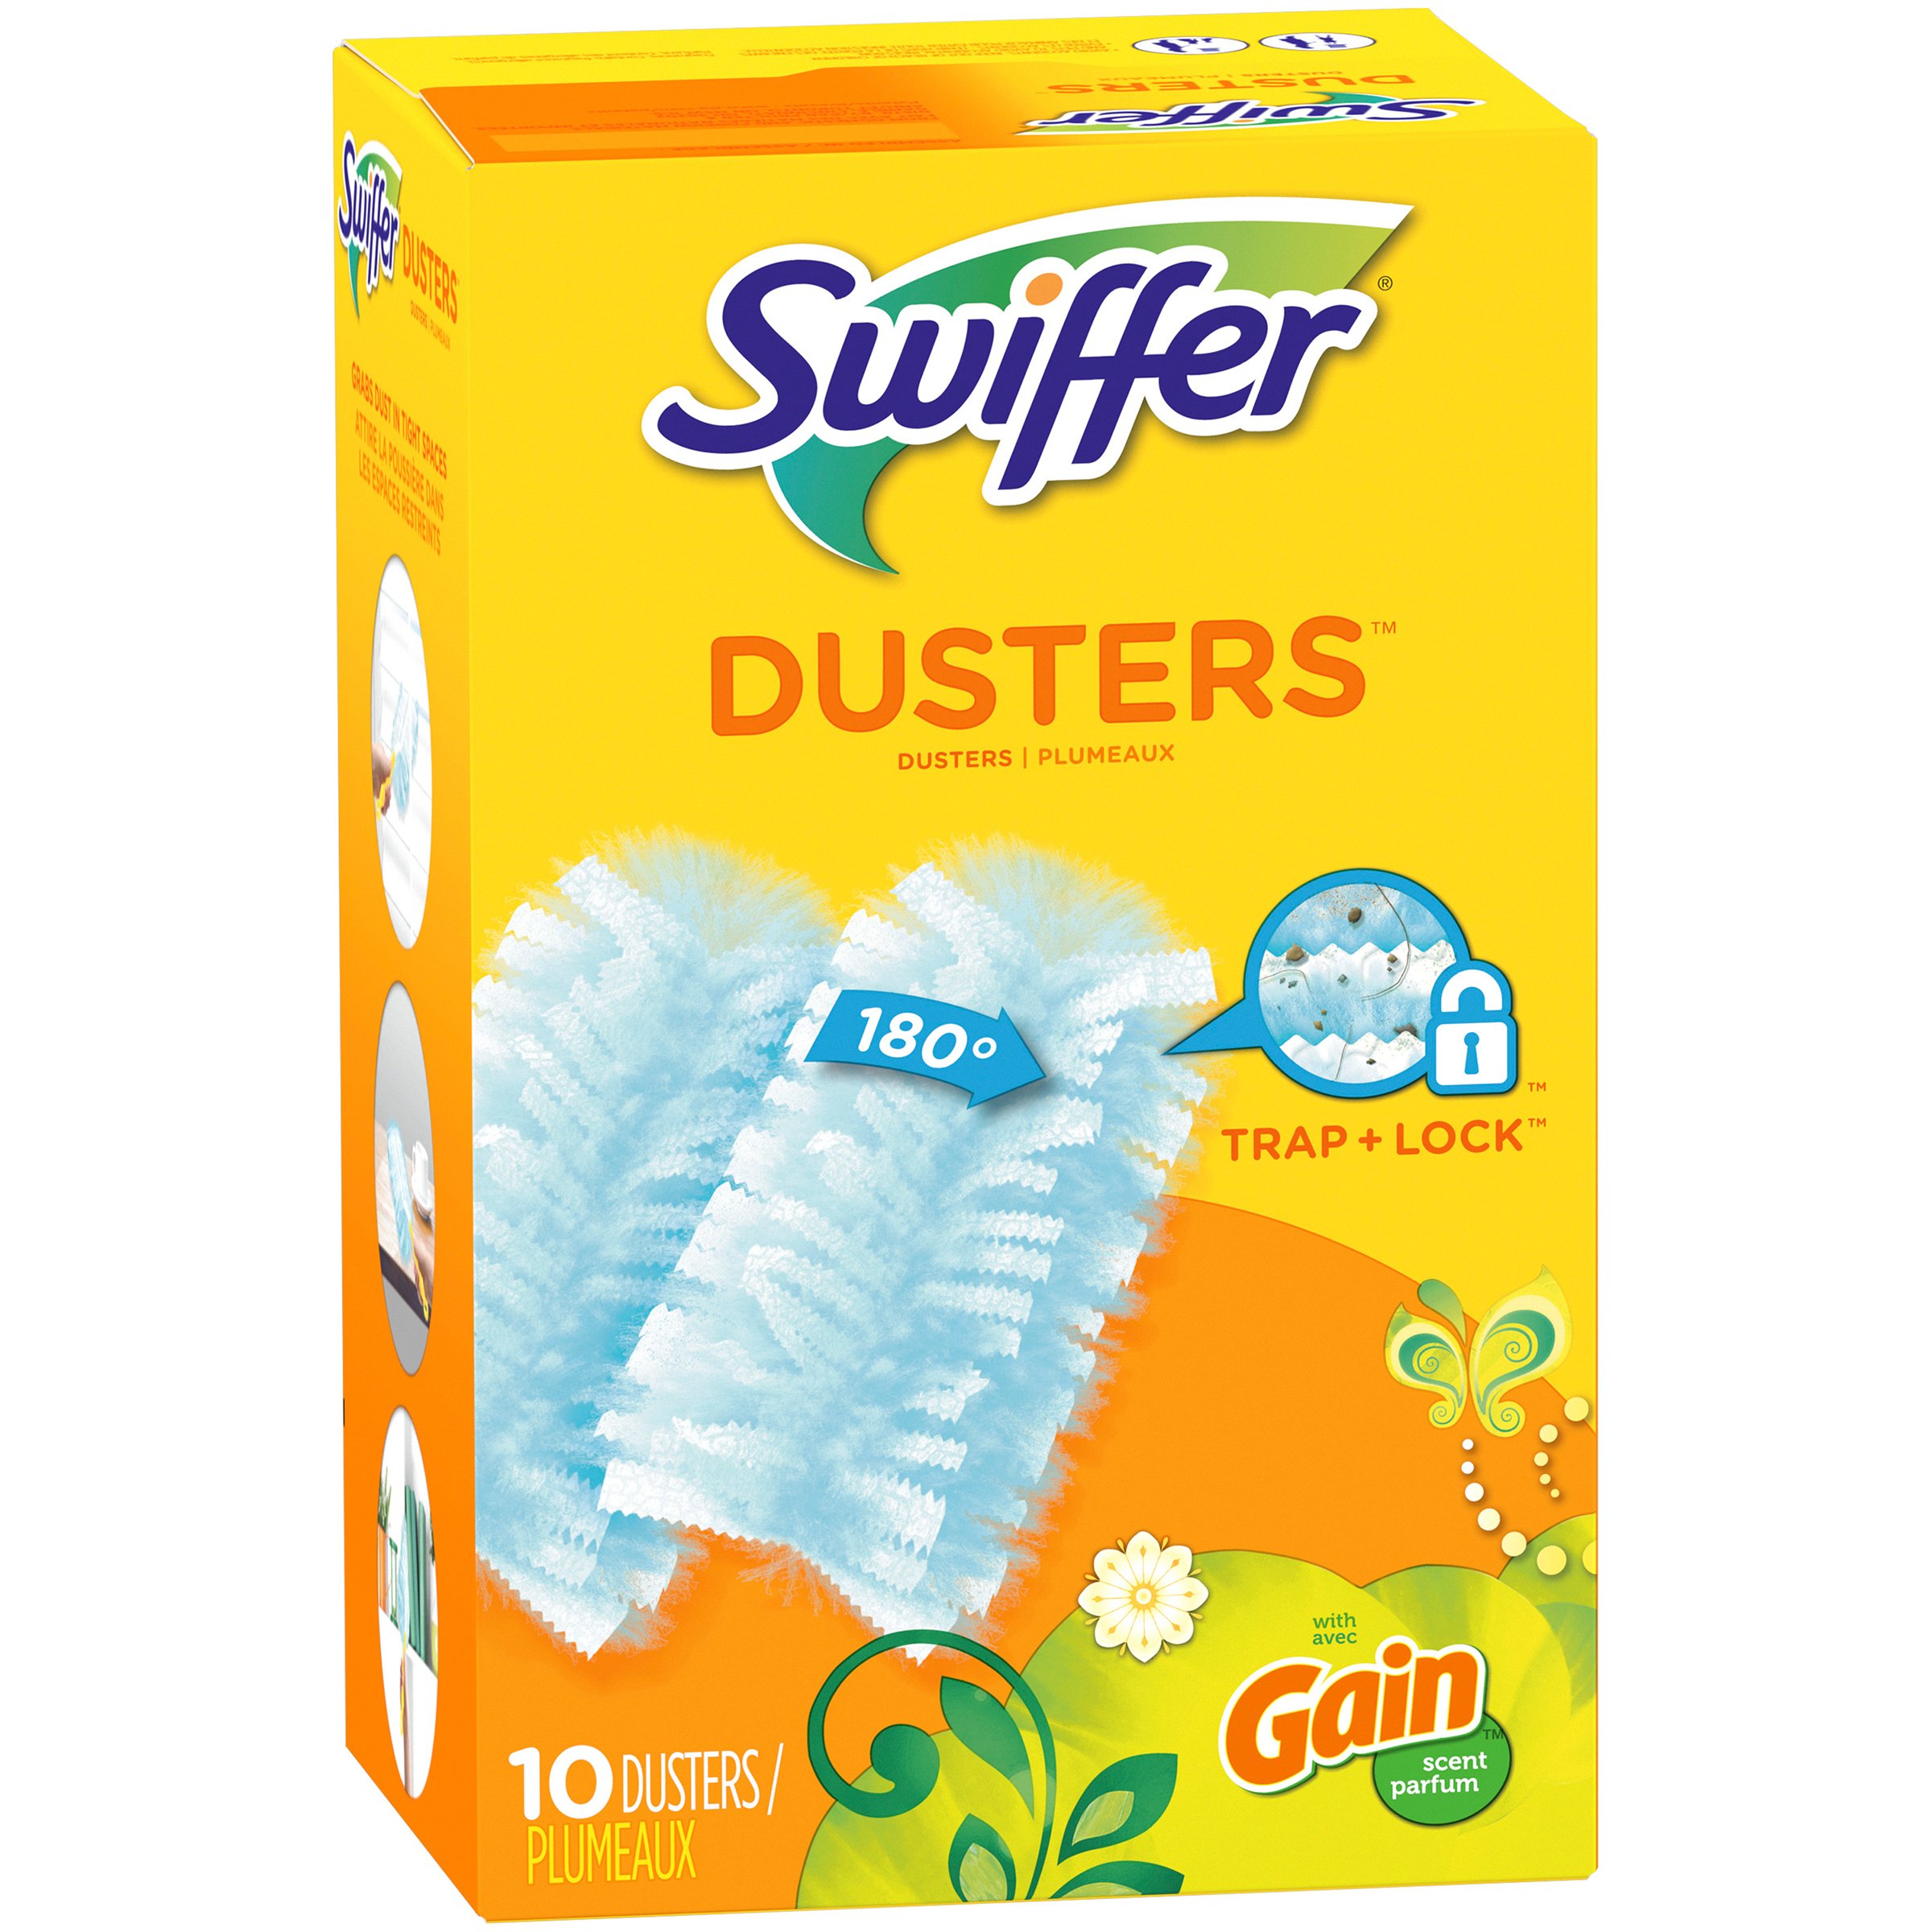 Swiffer Duster Gain Original Scent Multi-Surface Refills